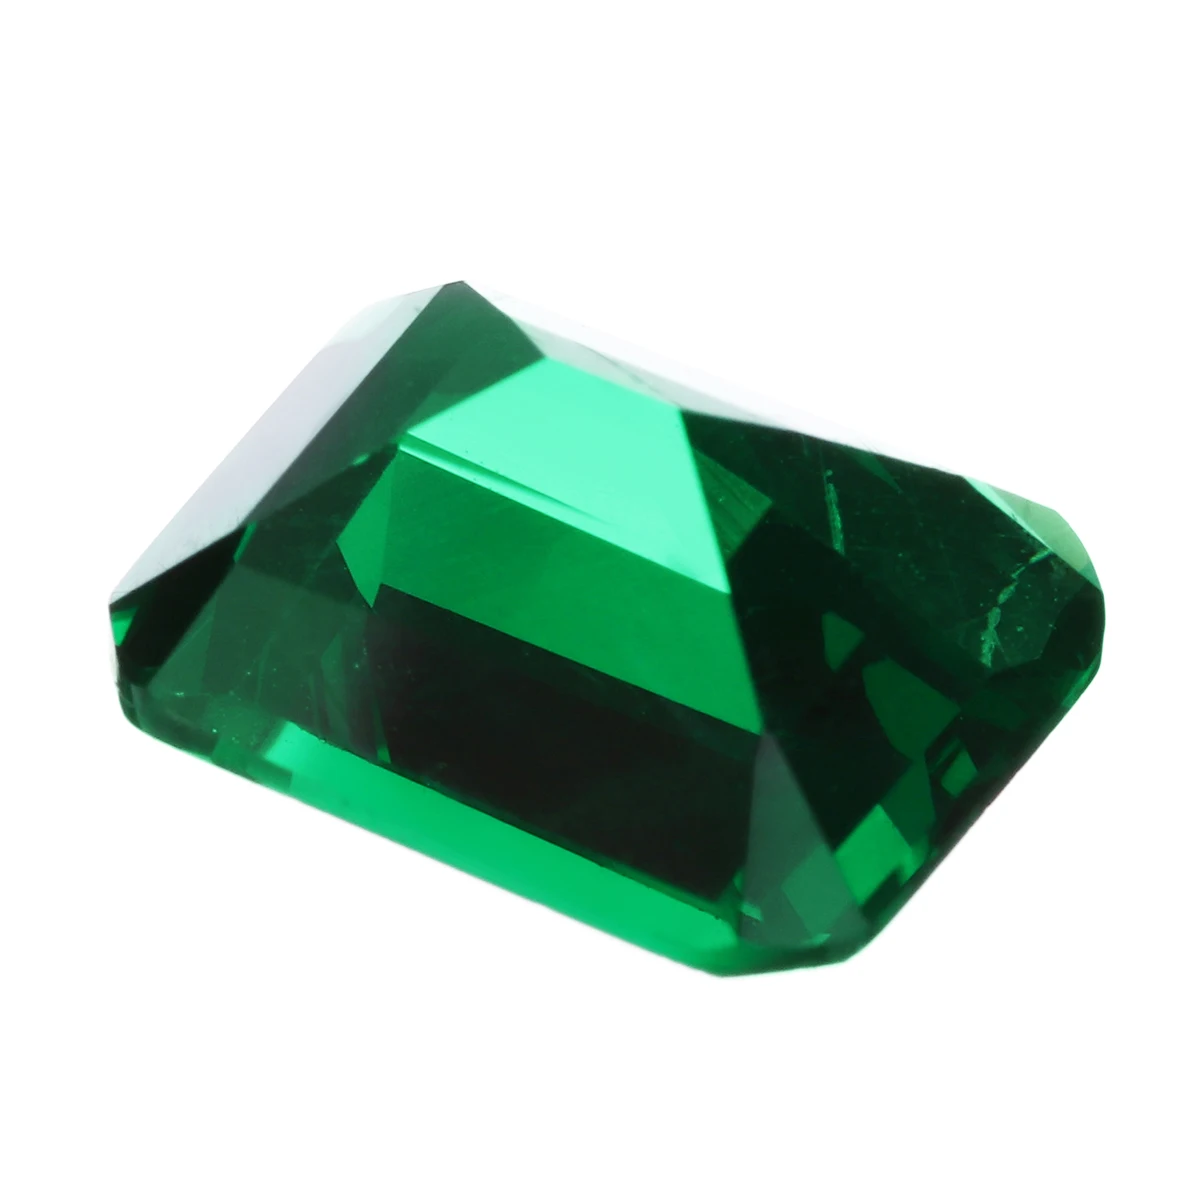 

10x12x6.0 / 9x11x5.69 / 8x10x4.72 VVS Clarity AAA Synthetic Green Emerald Diamond Decoration Crafts Stones